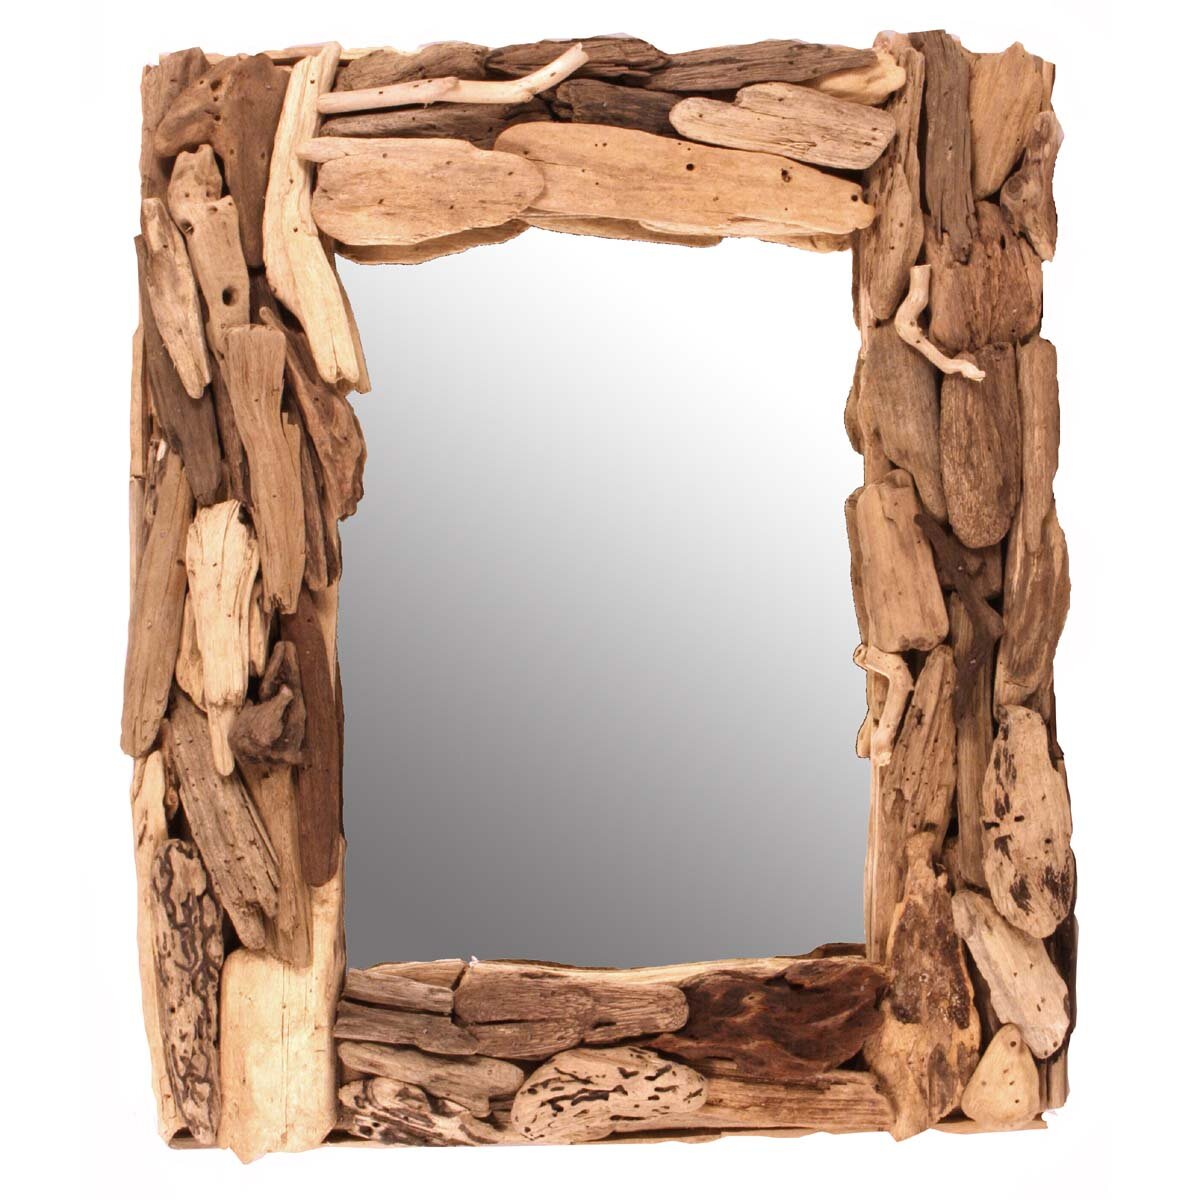 Рамка из дерева для зеркала: Рама для зеркала: 4 деревяшки? Мастер-класс